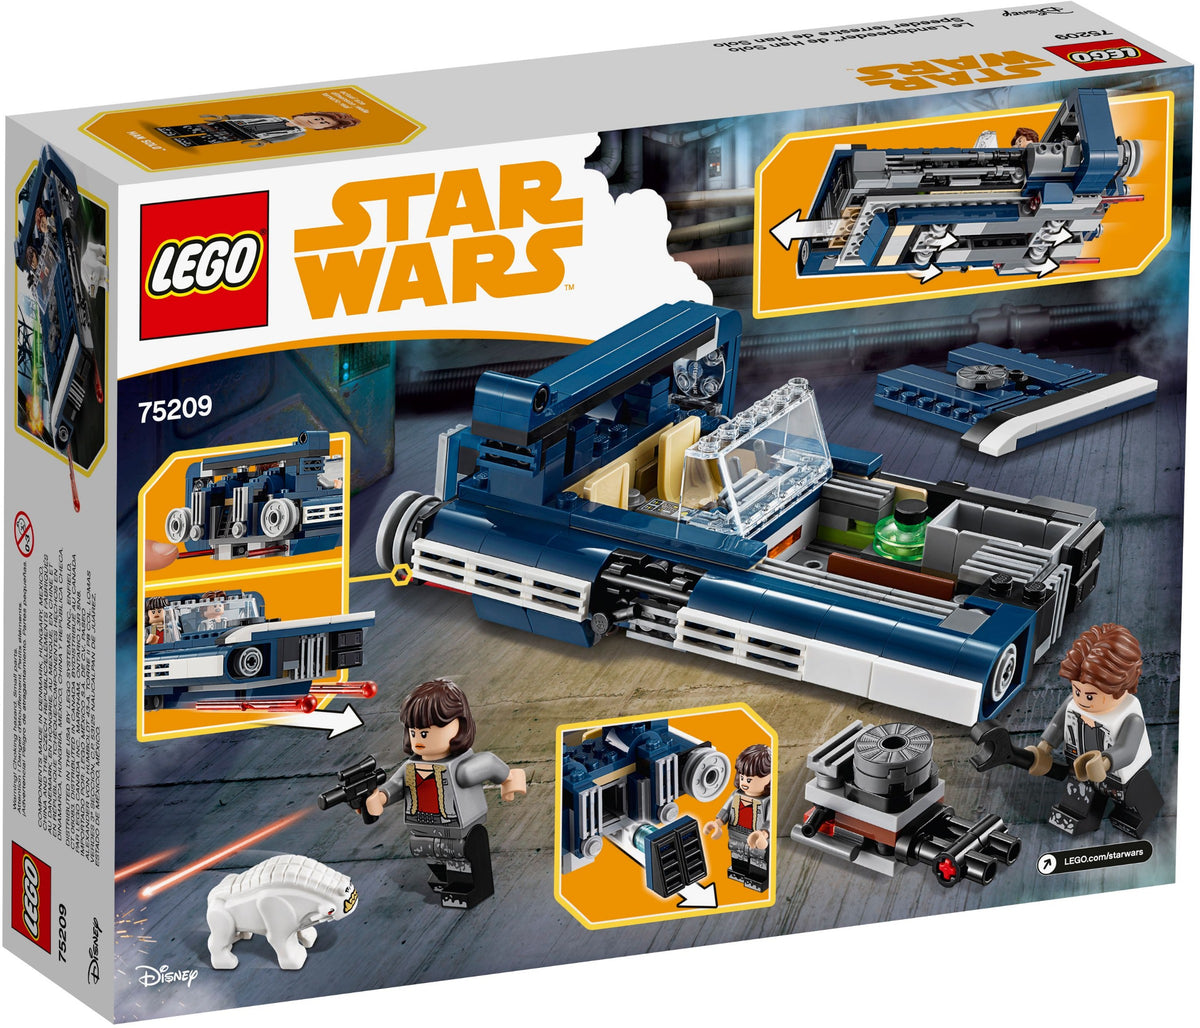 LEGO Star Wars 75209 Han Solo&#39;s Landspeeder